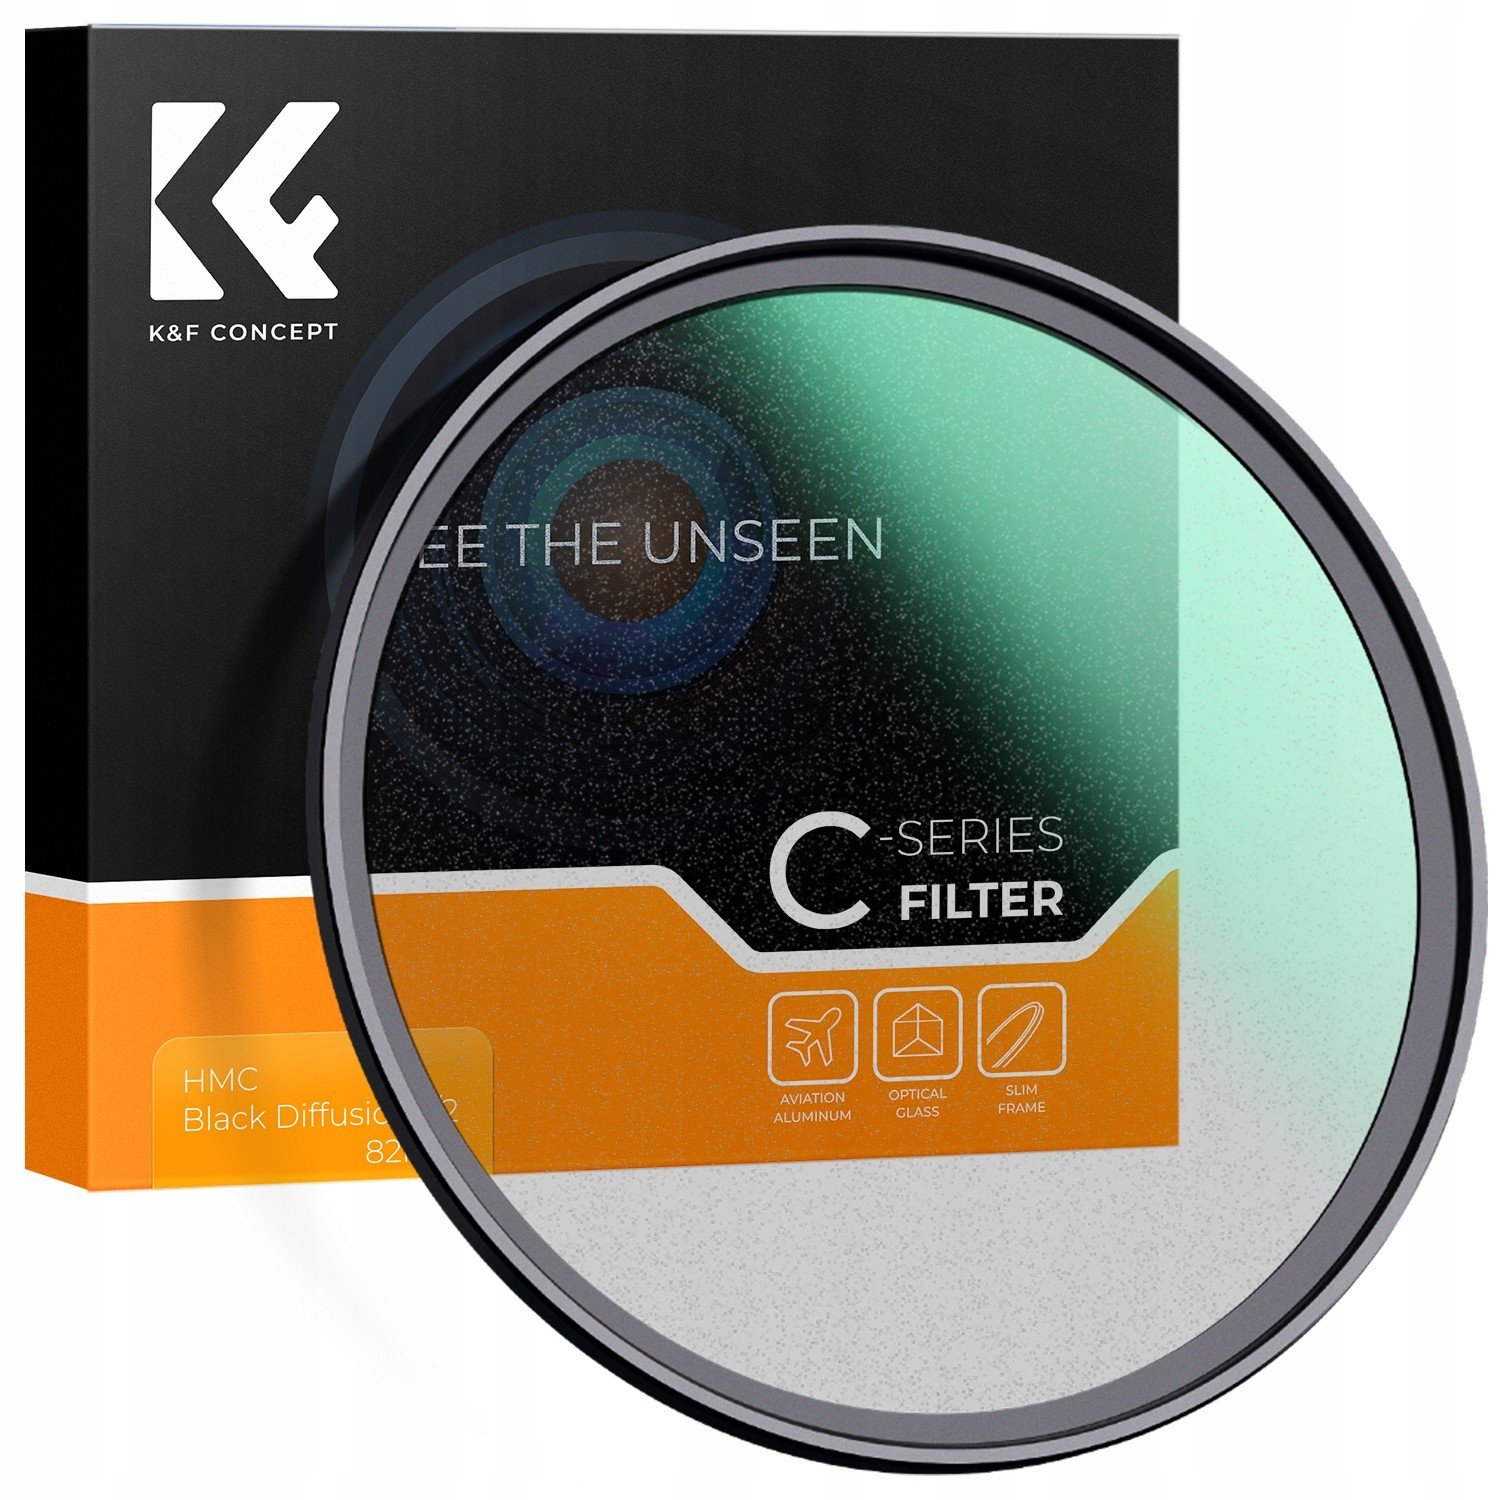 Difuzní filtr Black Mist 1/2 67mm Nano-C K&f